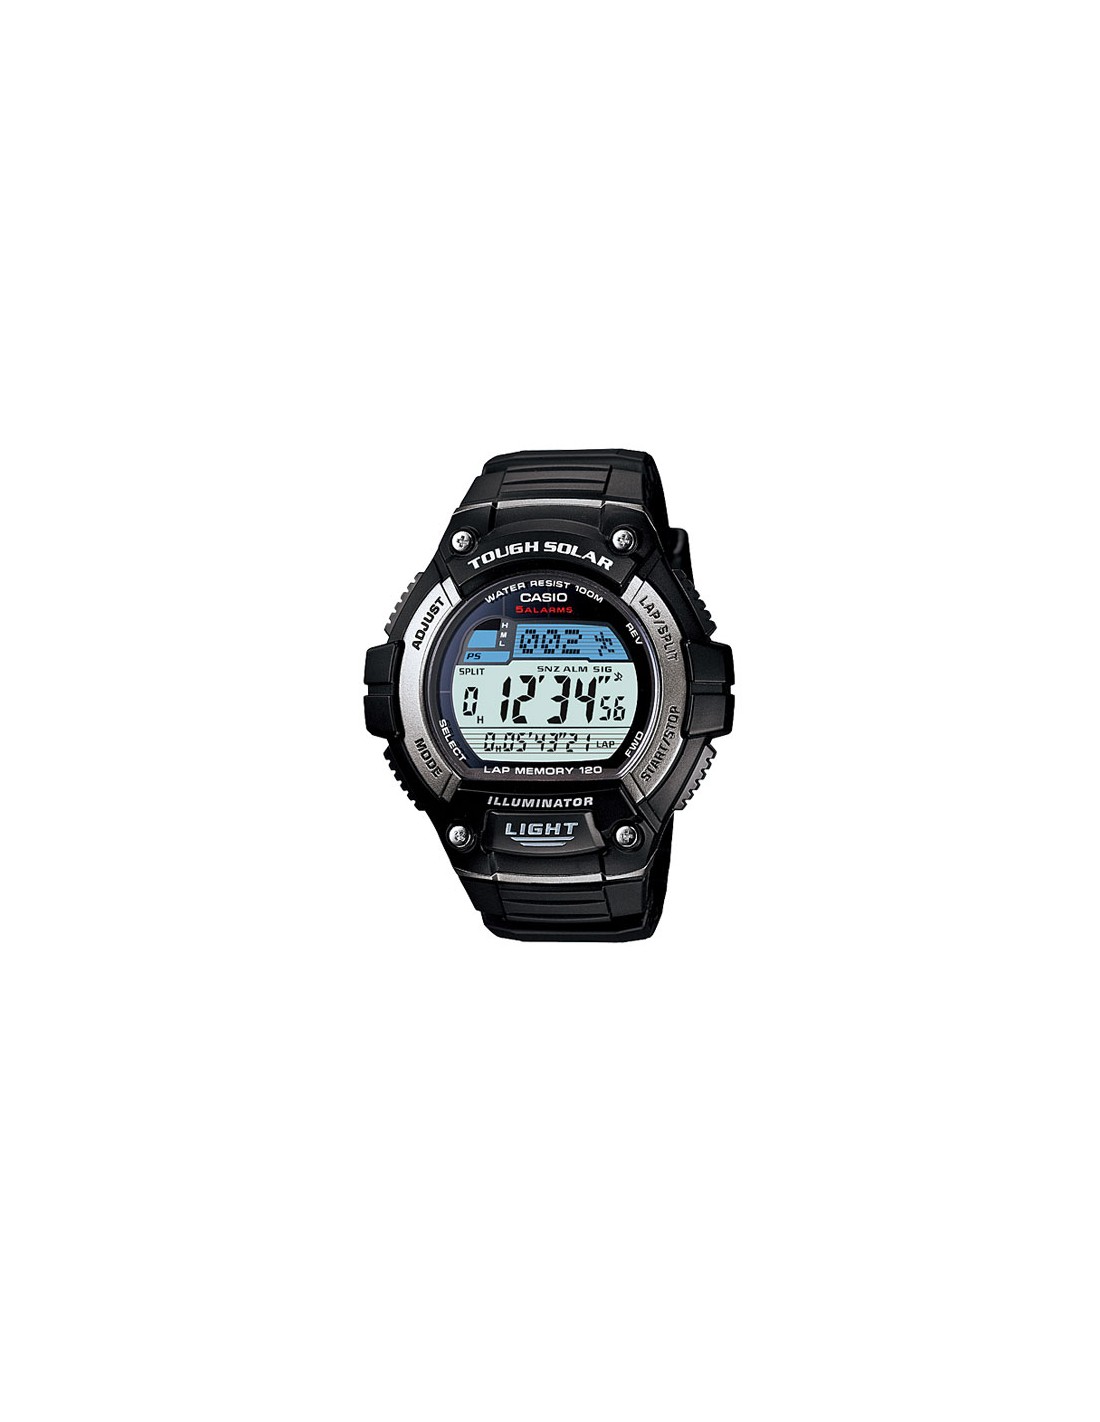 Reloj Casio hombre Modelo W-S220-1AV – ConReloj